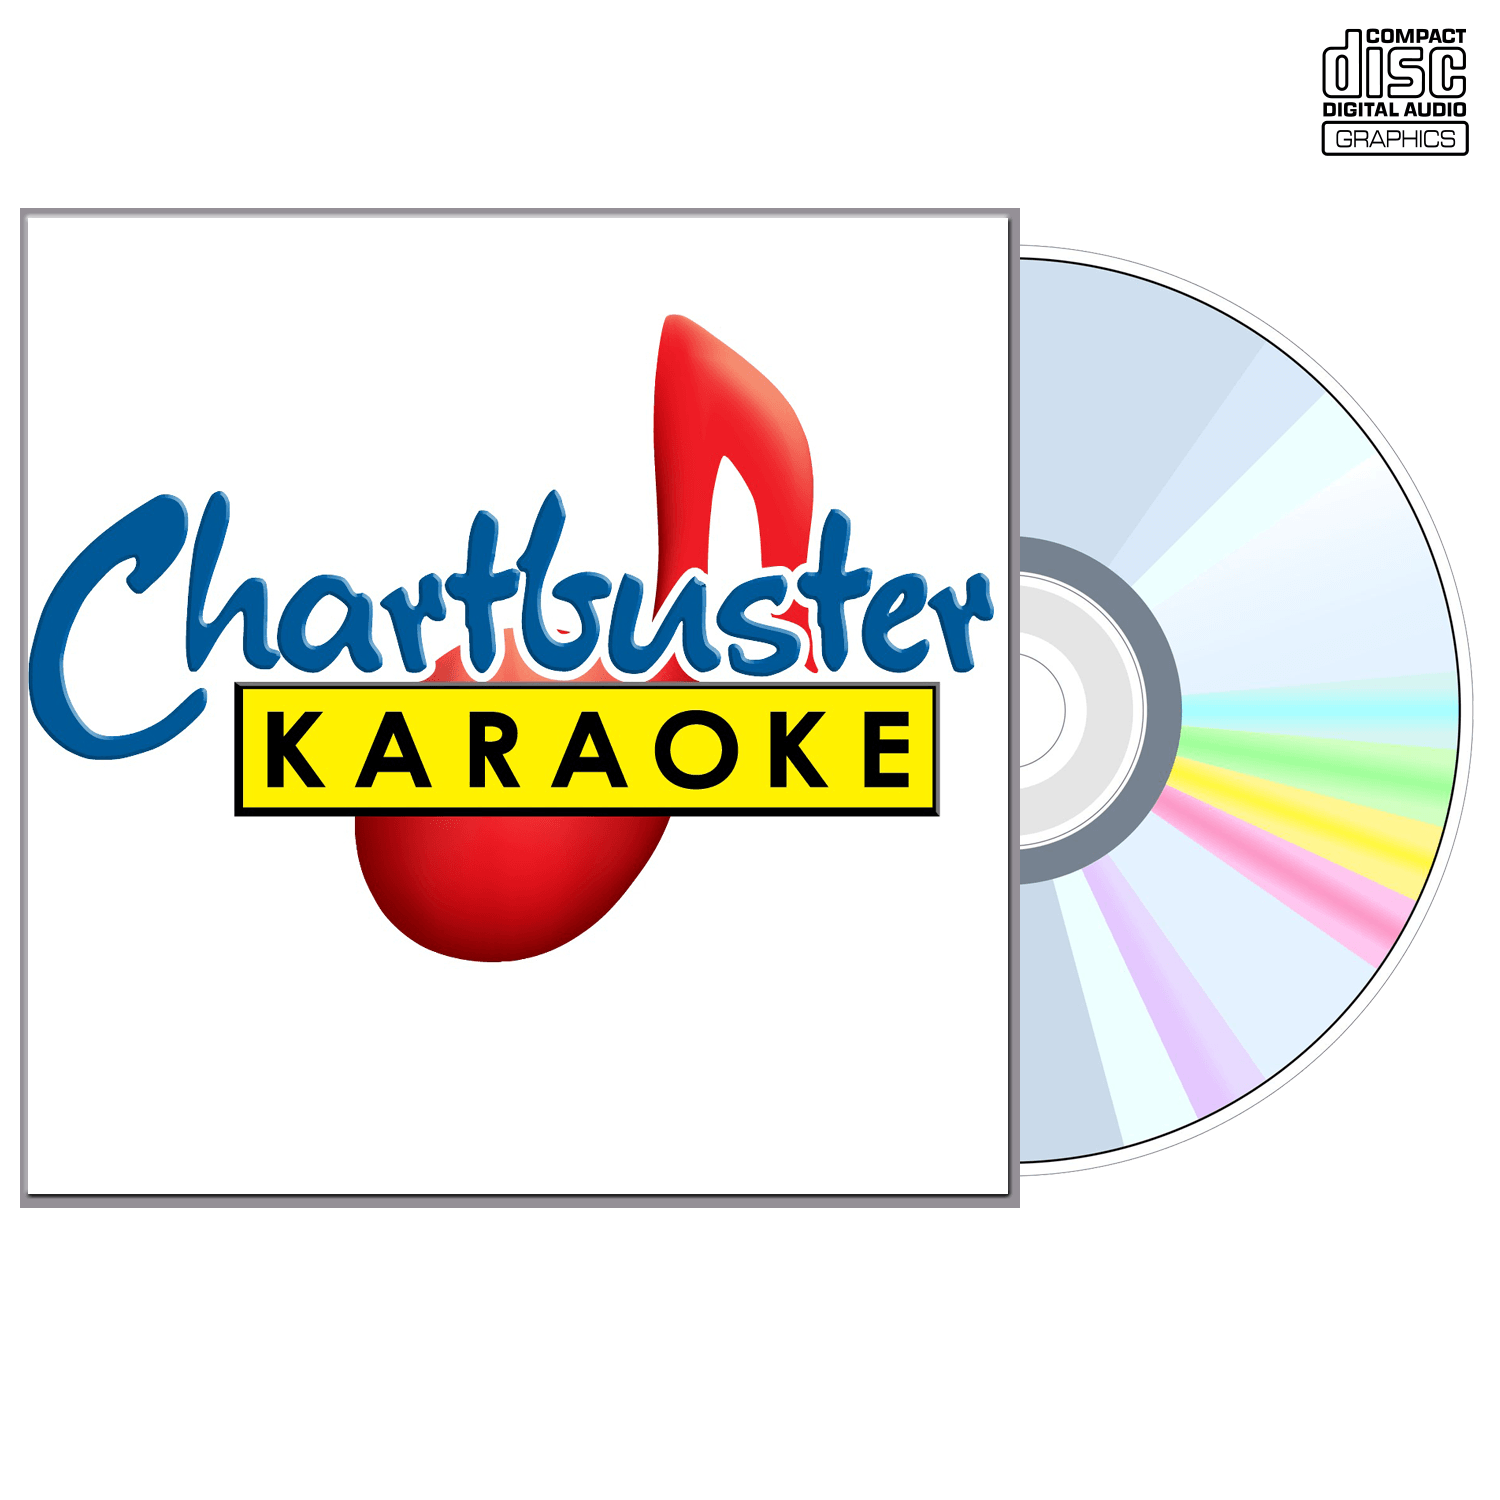 Tammy Wynette Vol 2 - CD+G - Chartbuster Karaoke - Karaoke Home Entertainment